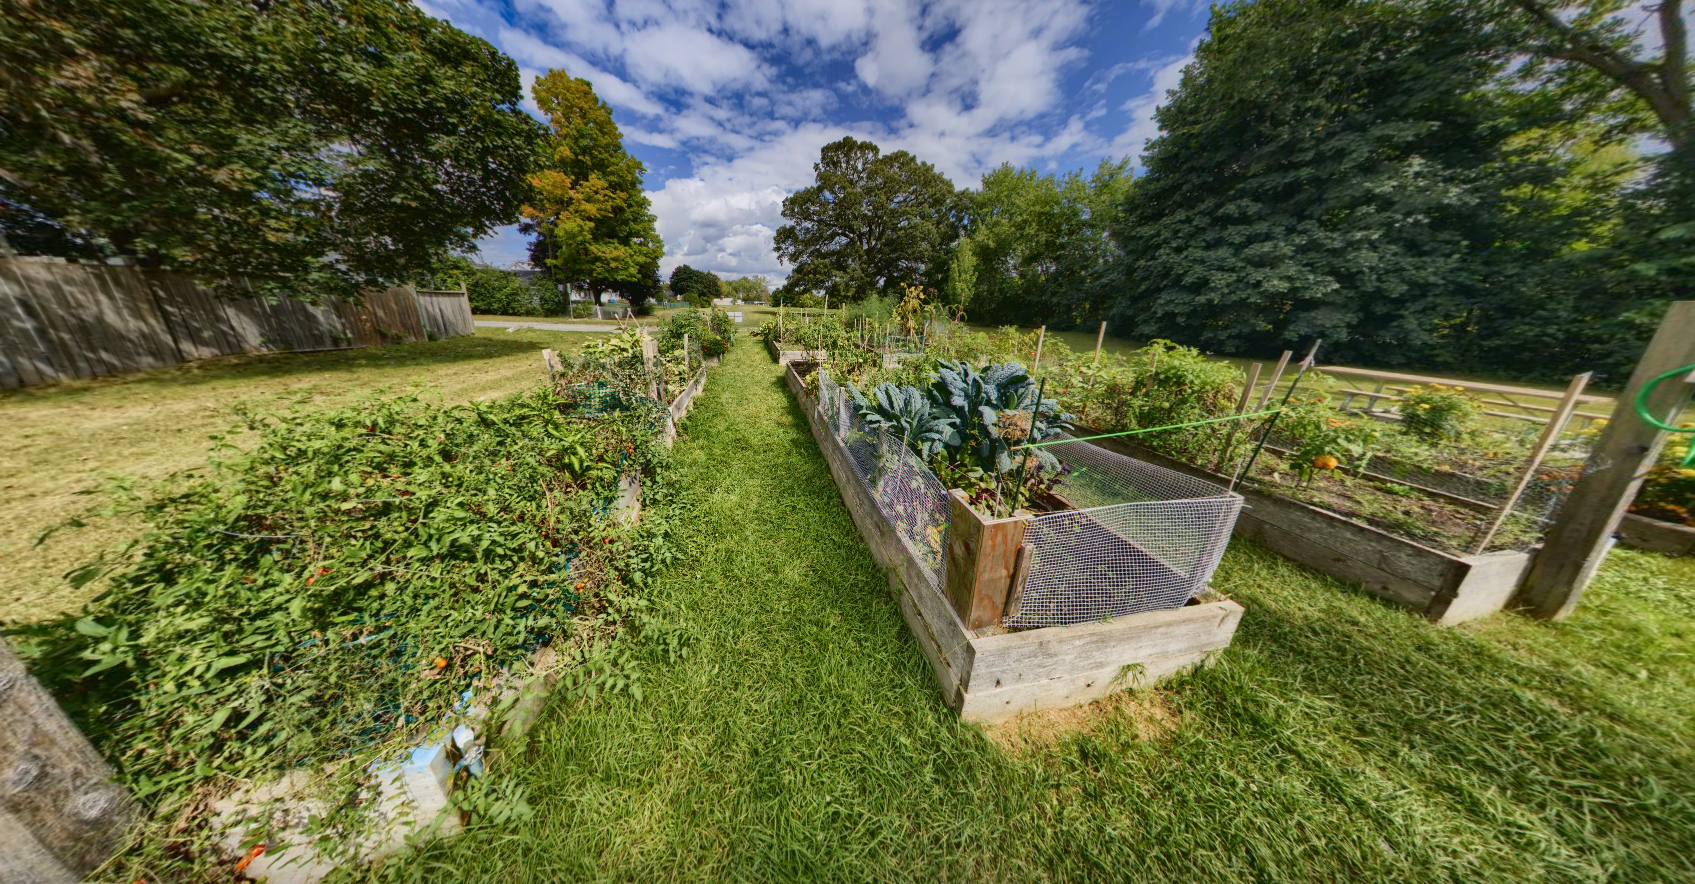 Photo of the Community Gardens garden beds.